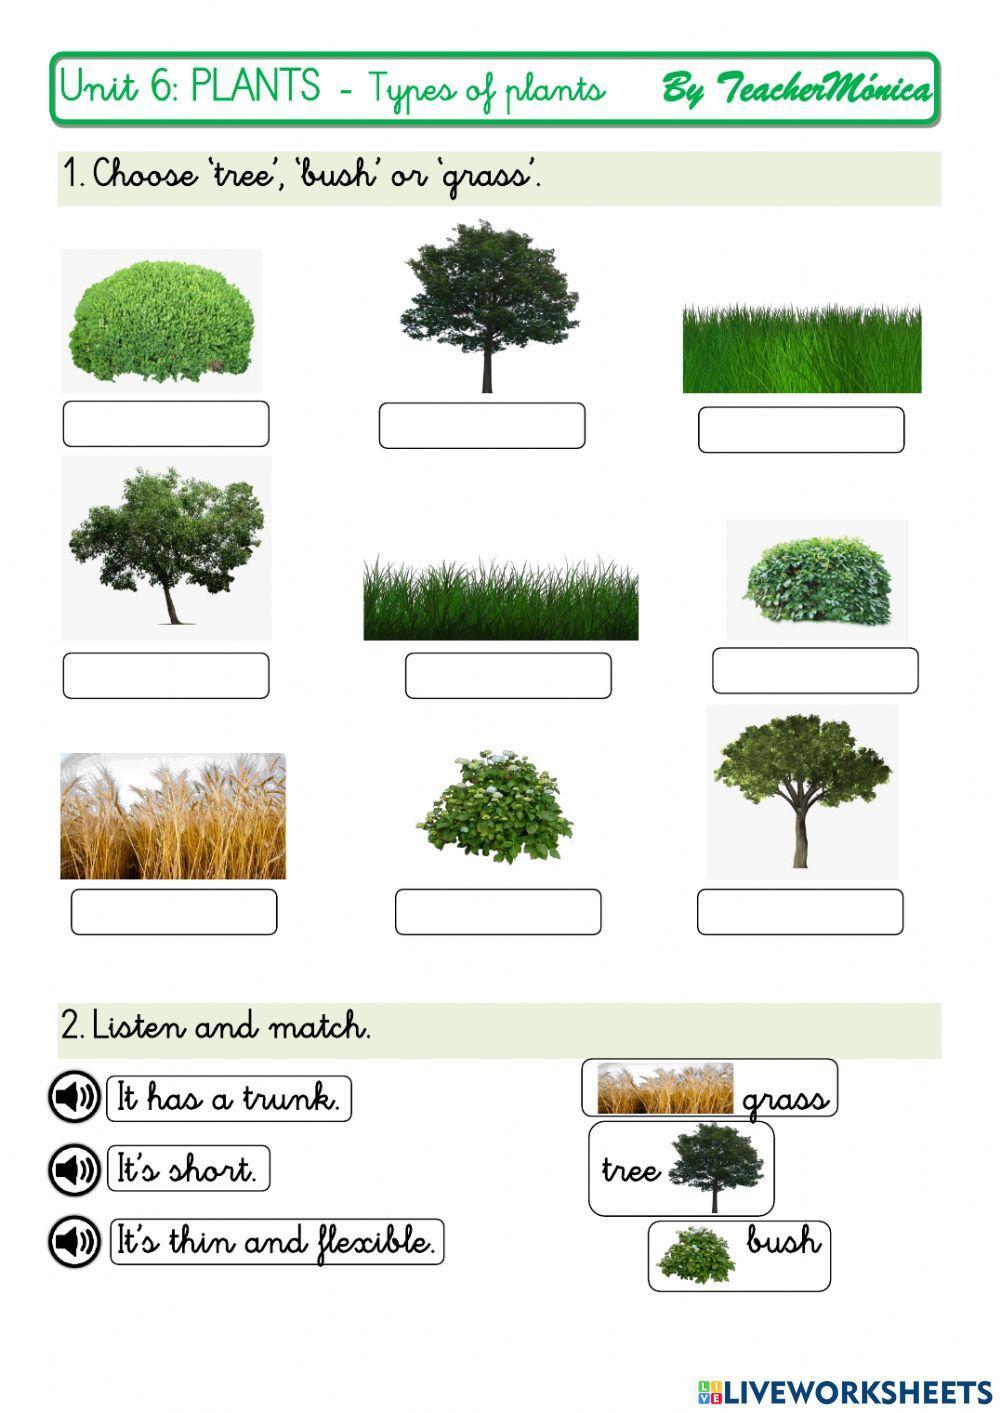 Tree, bush or grass?